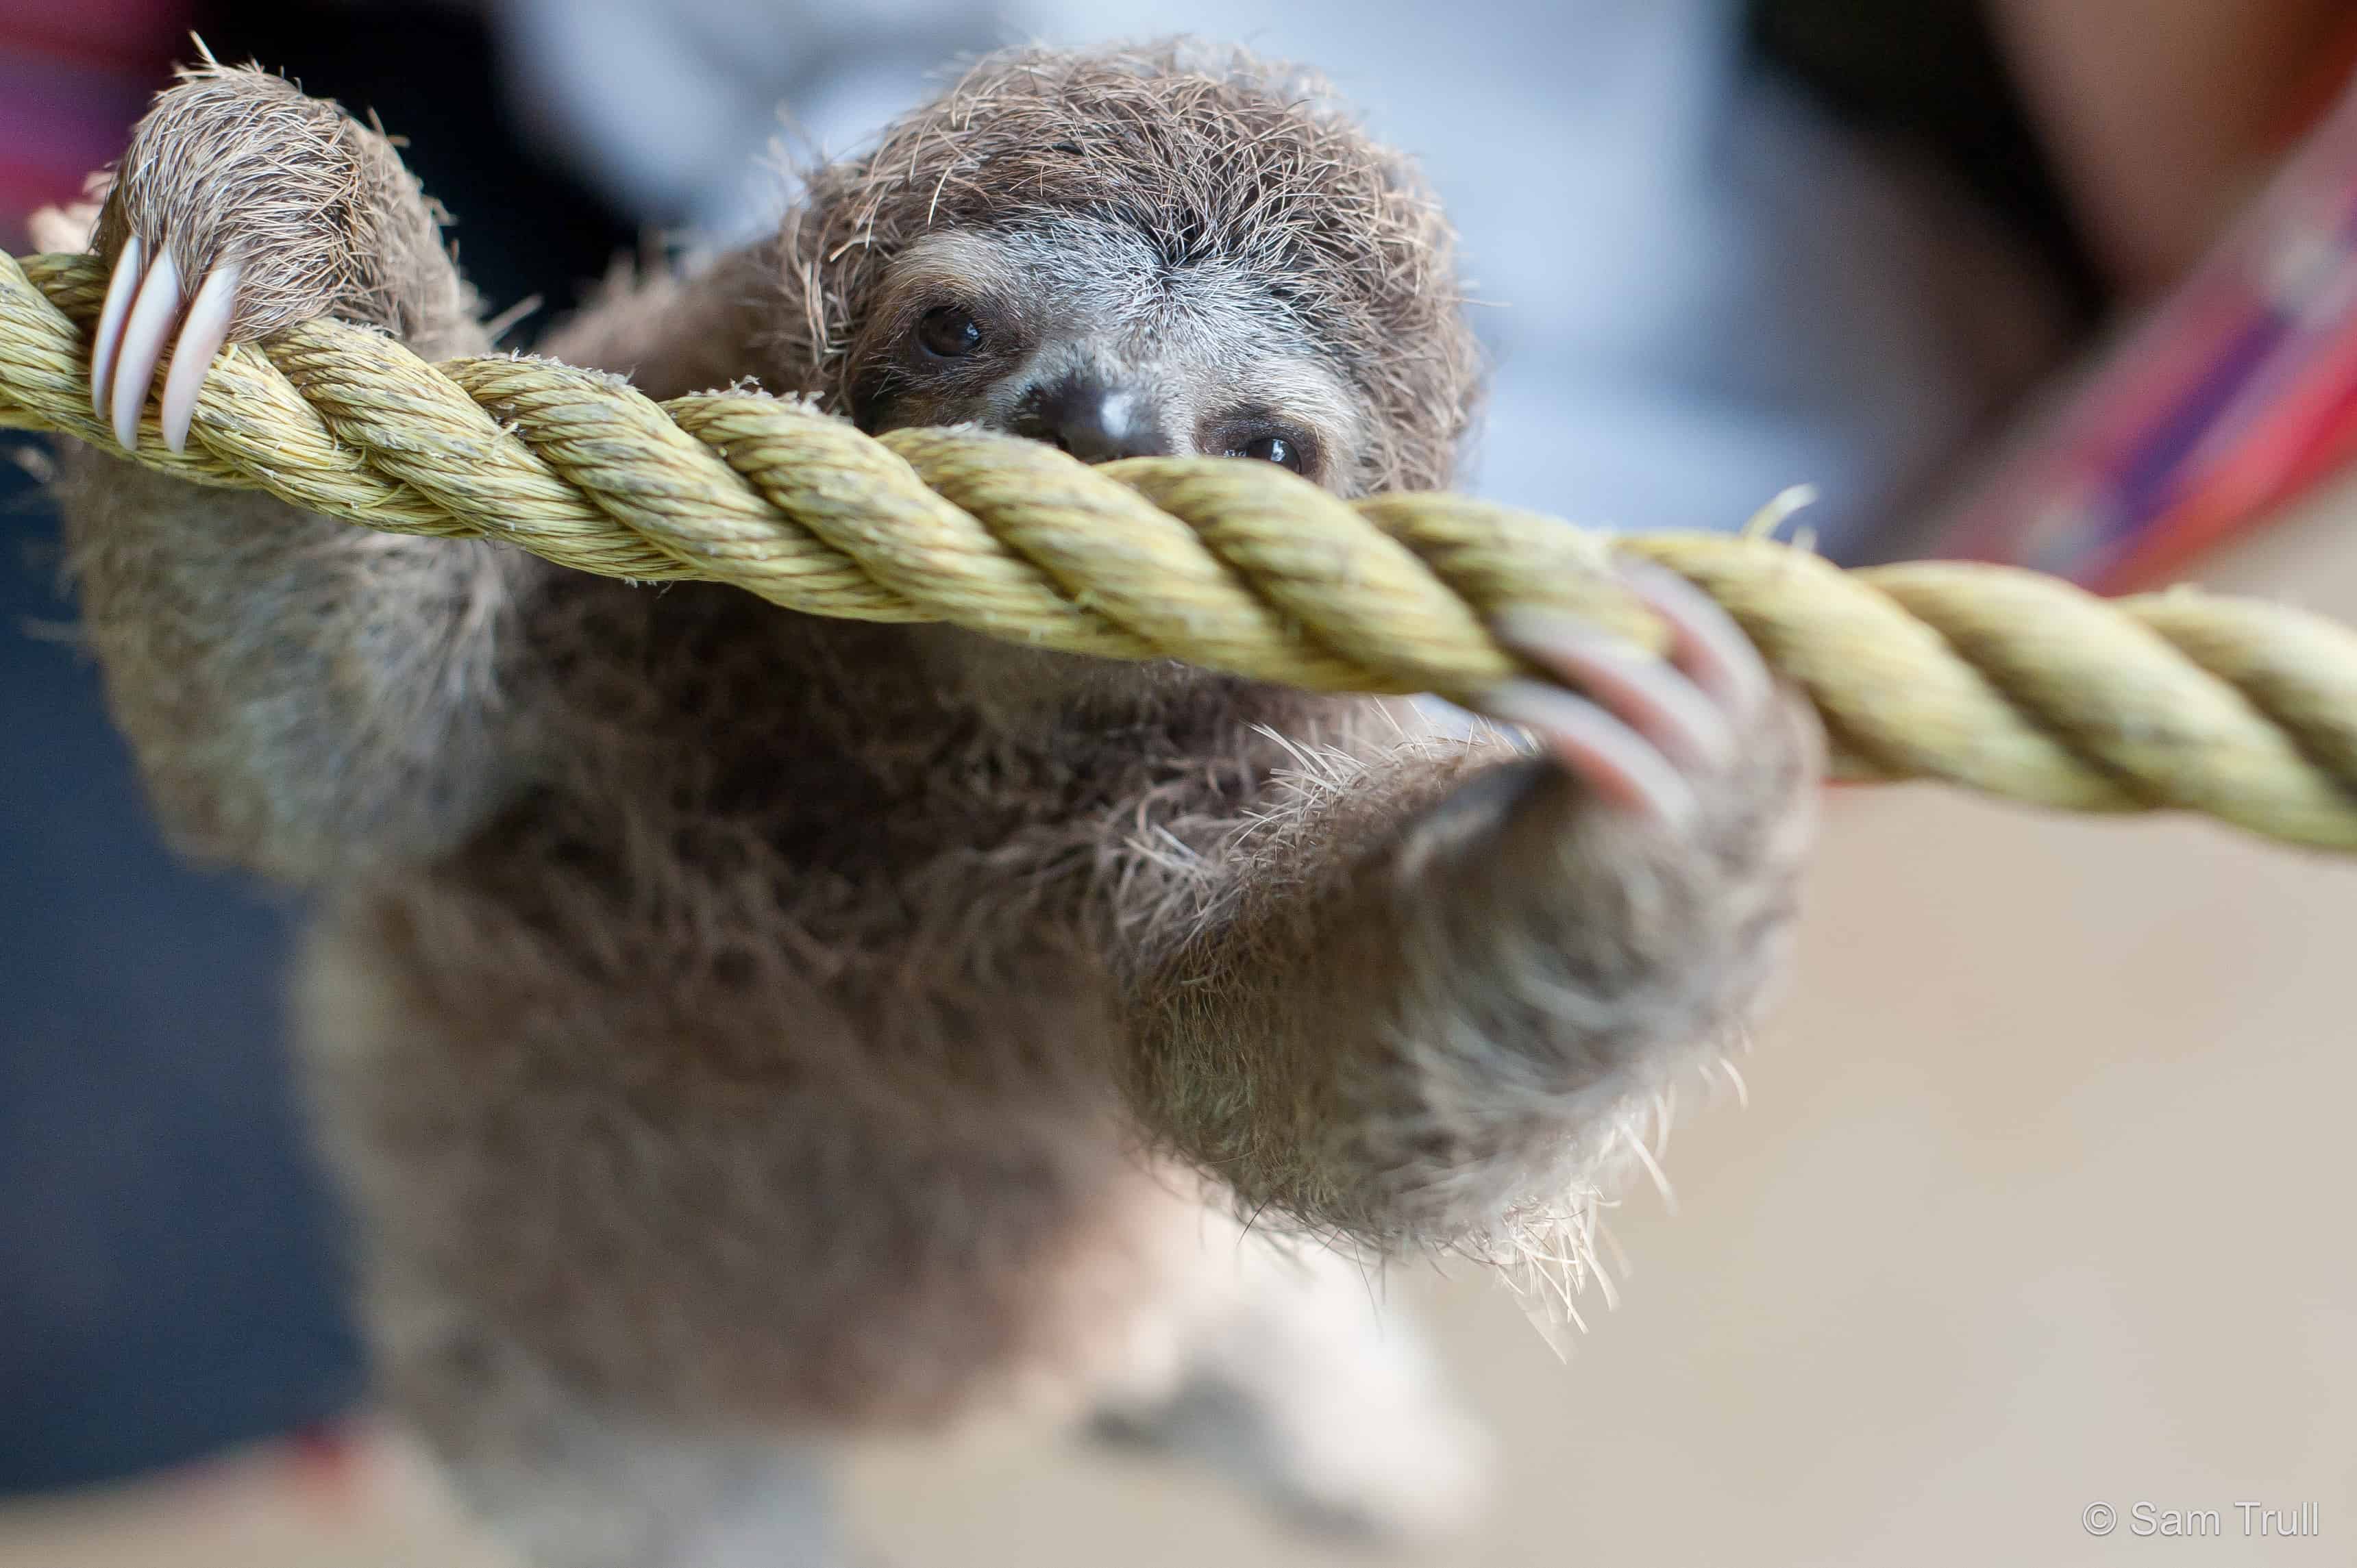 paralyzed baby sloth